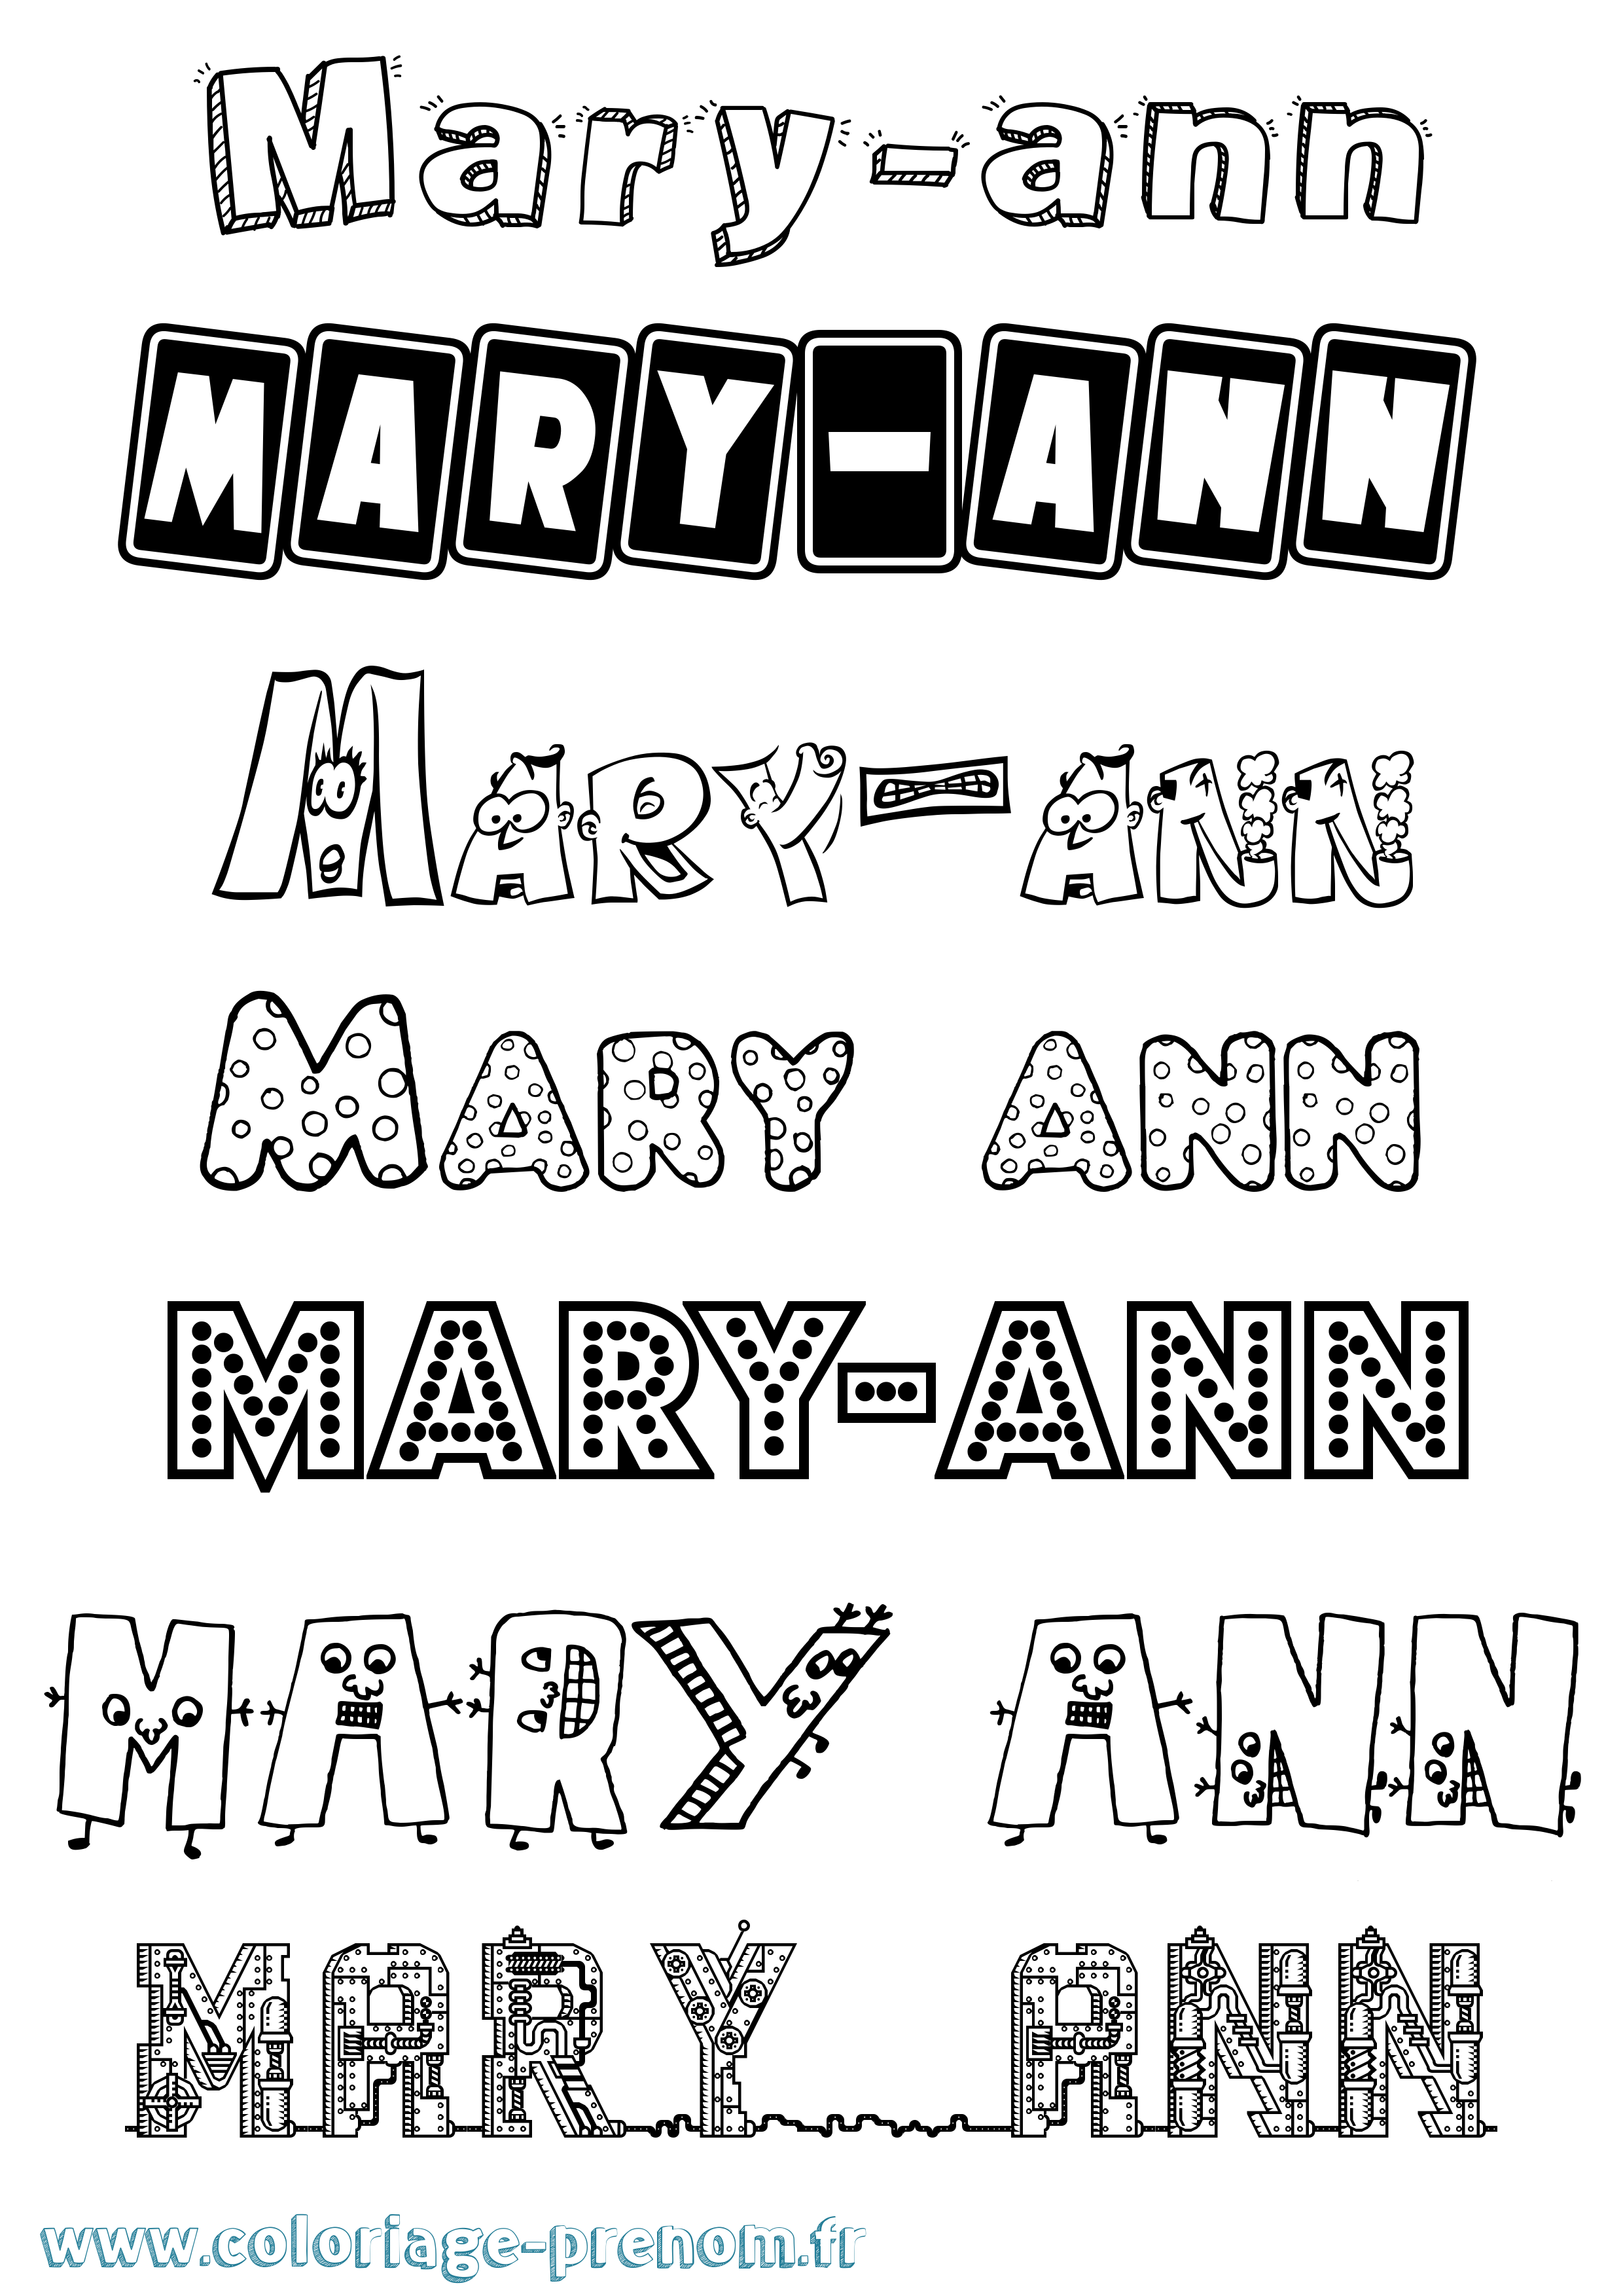 Coloriage prénom Mary-Ann Fun